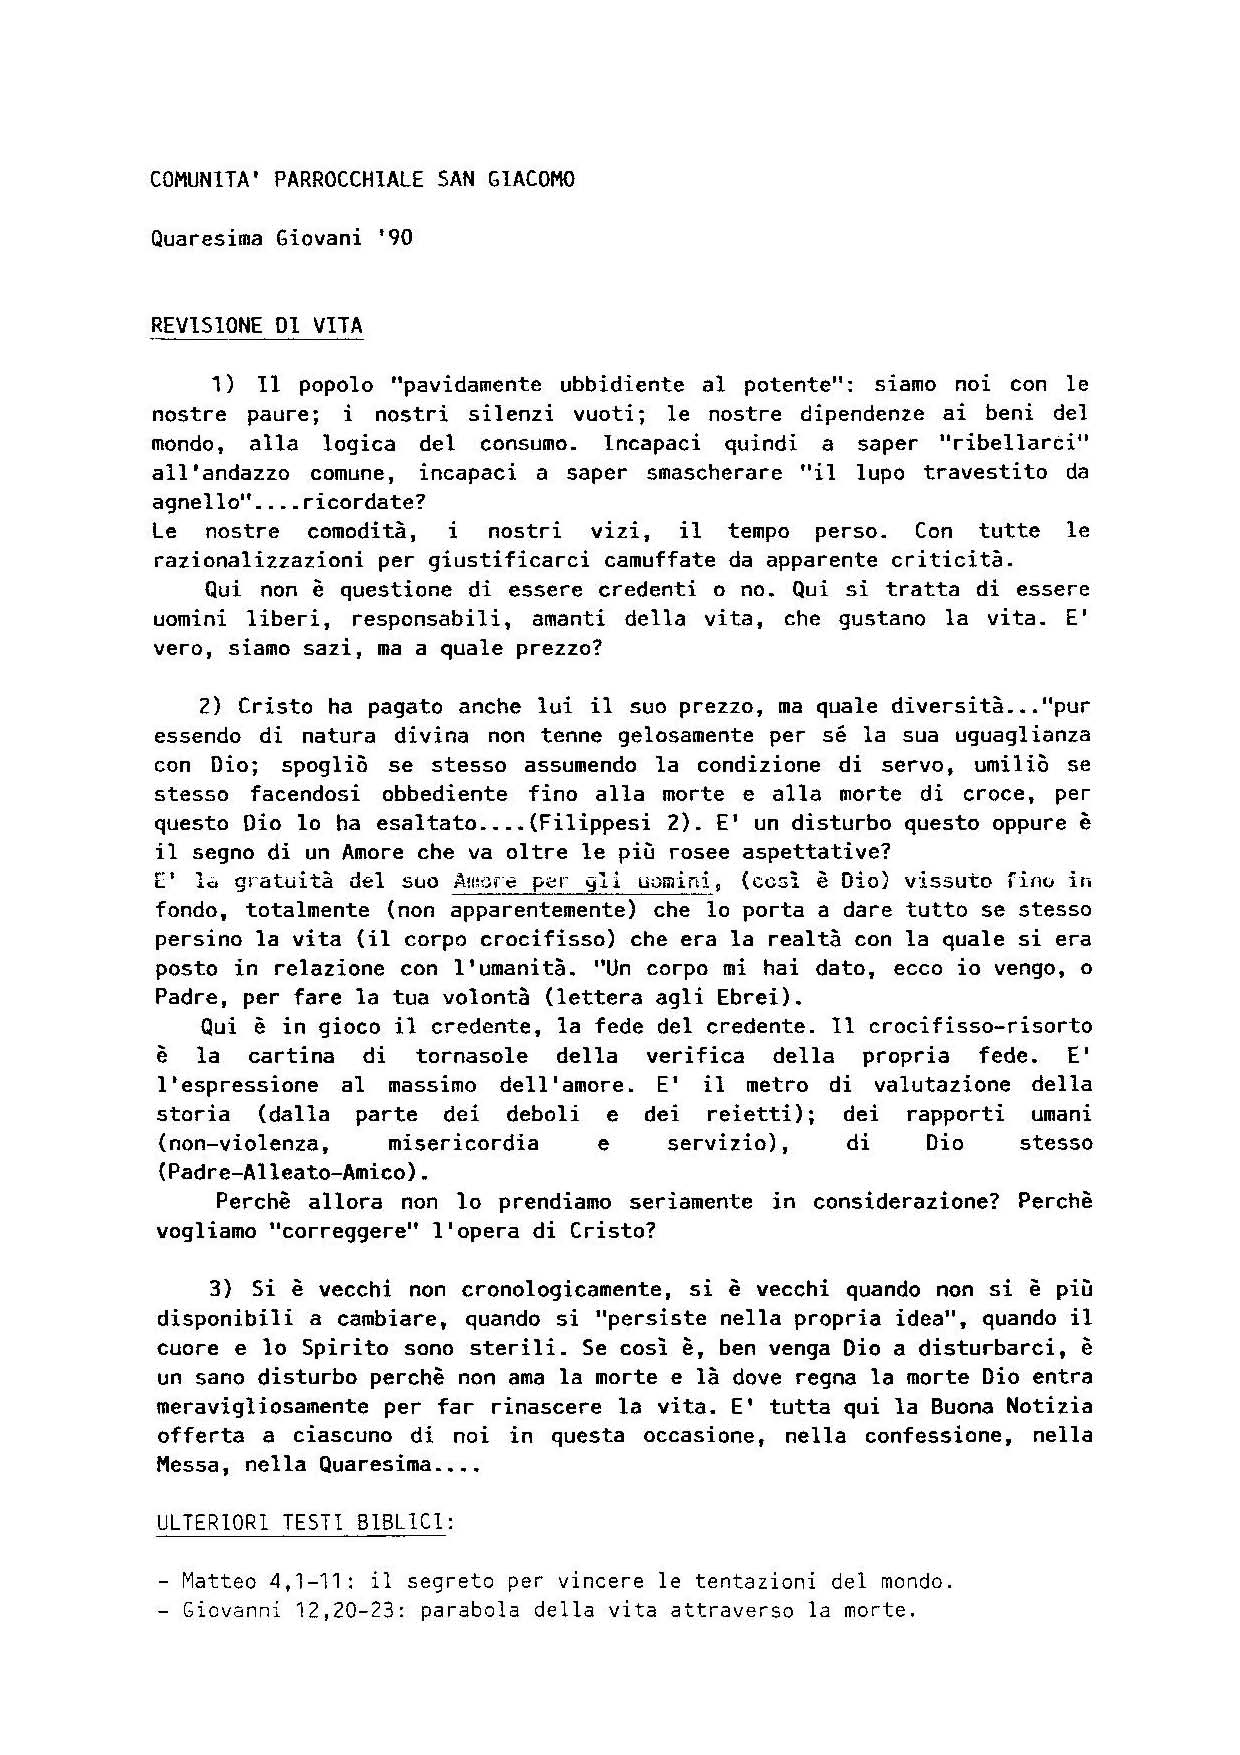 Quaresima_giovani_1990.pdf